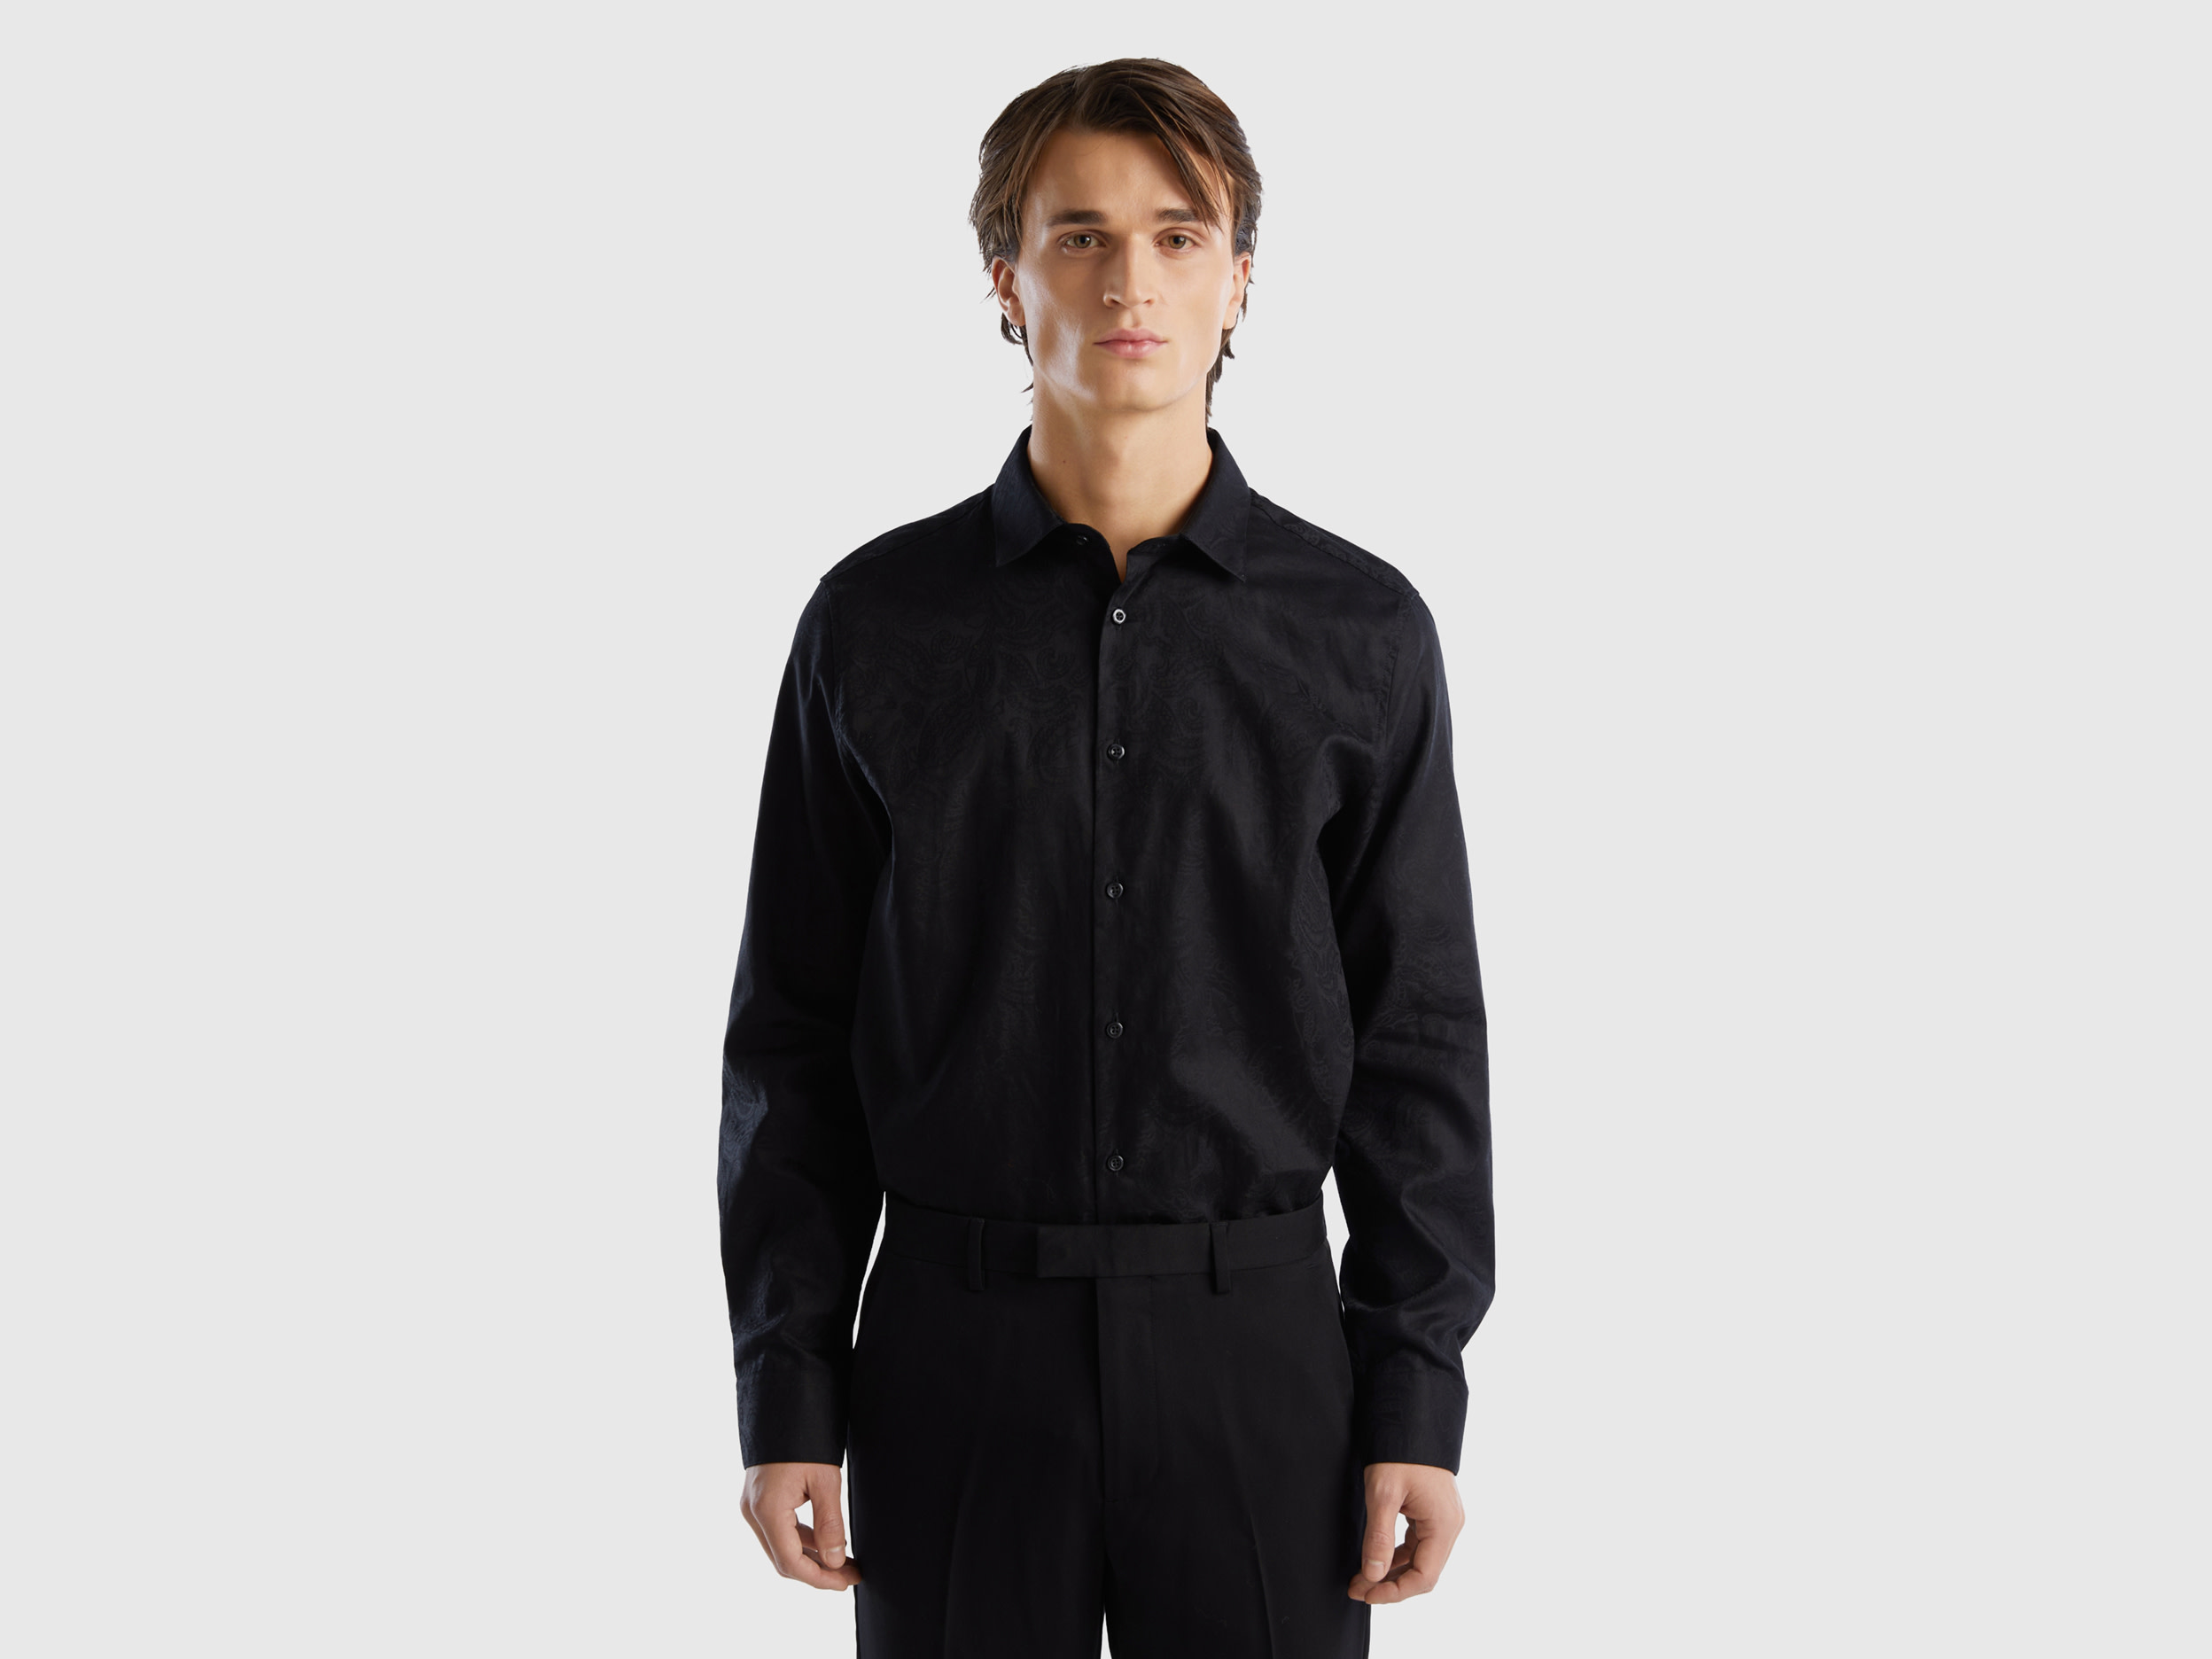 Benetton, Shirt With Jacquard Pattern, size XS, Black, Men